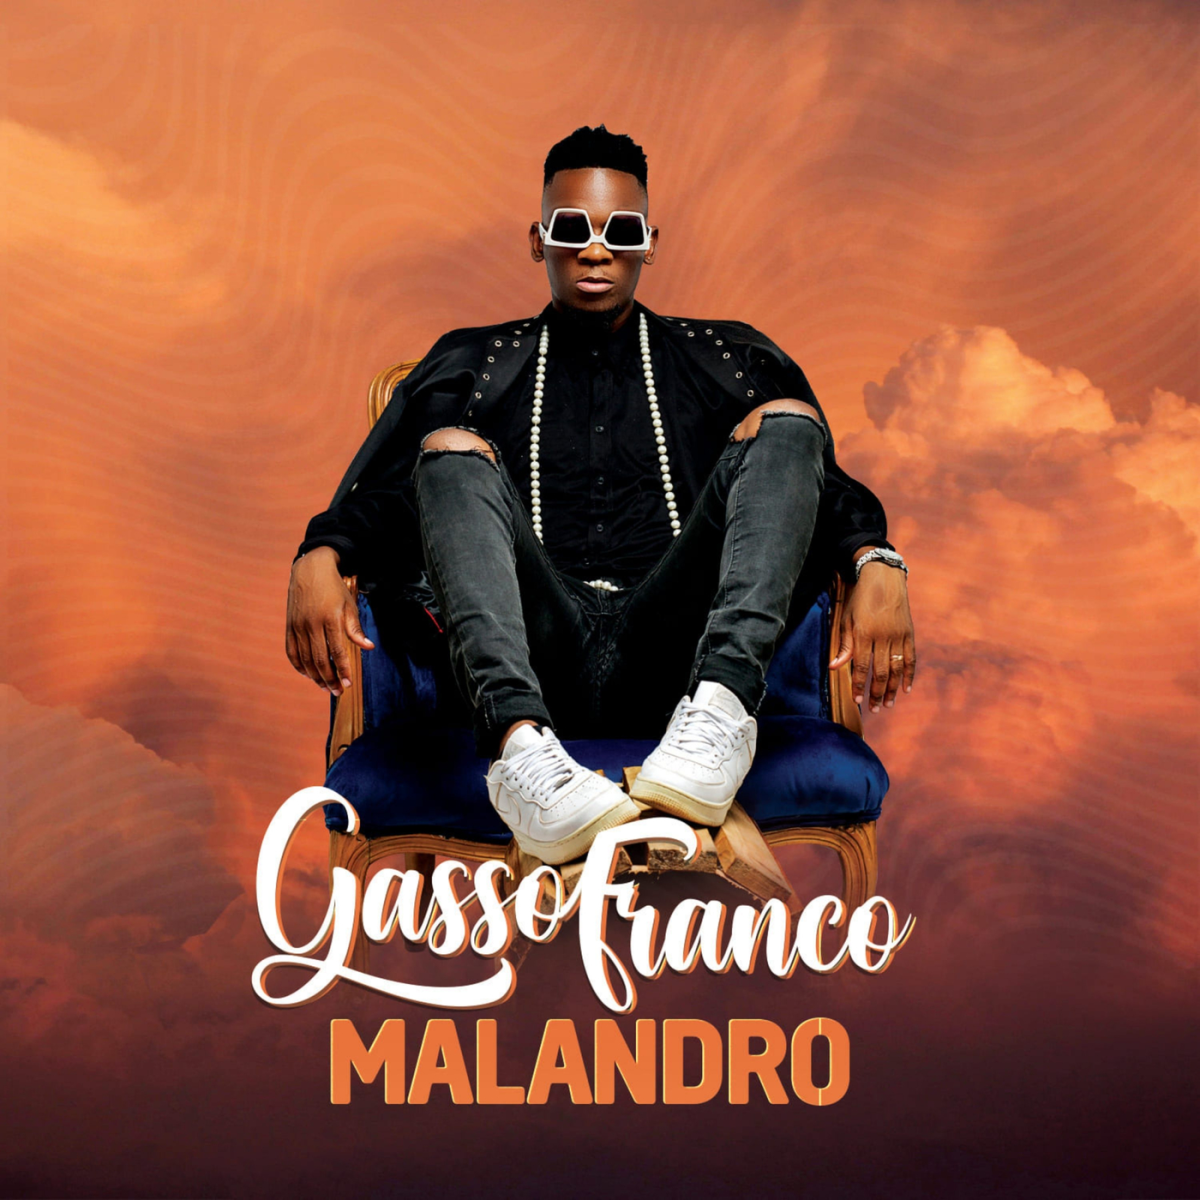 Malandro by Gasso Franco | Album